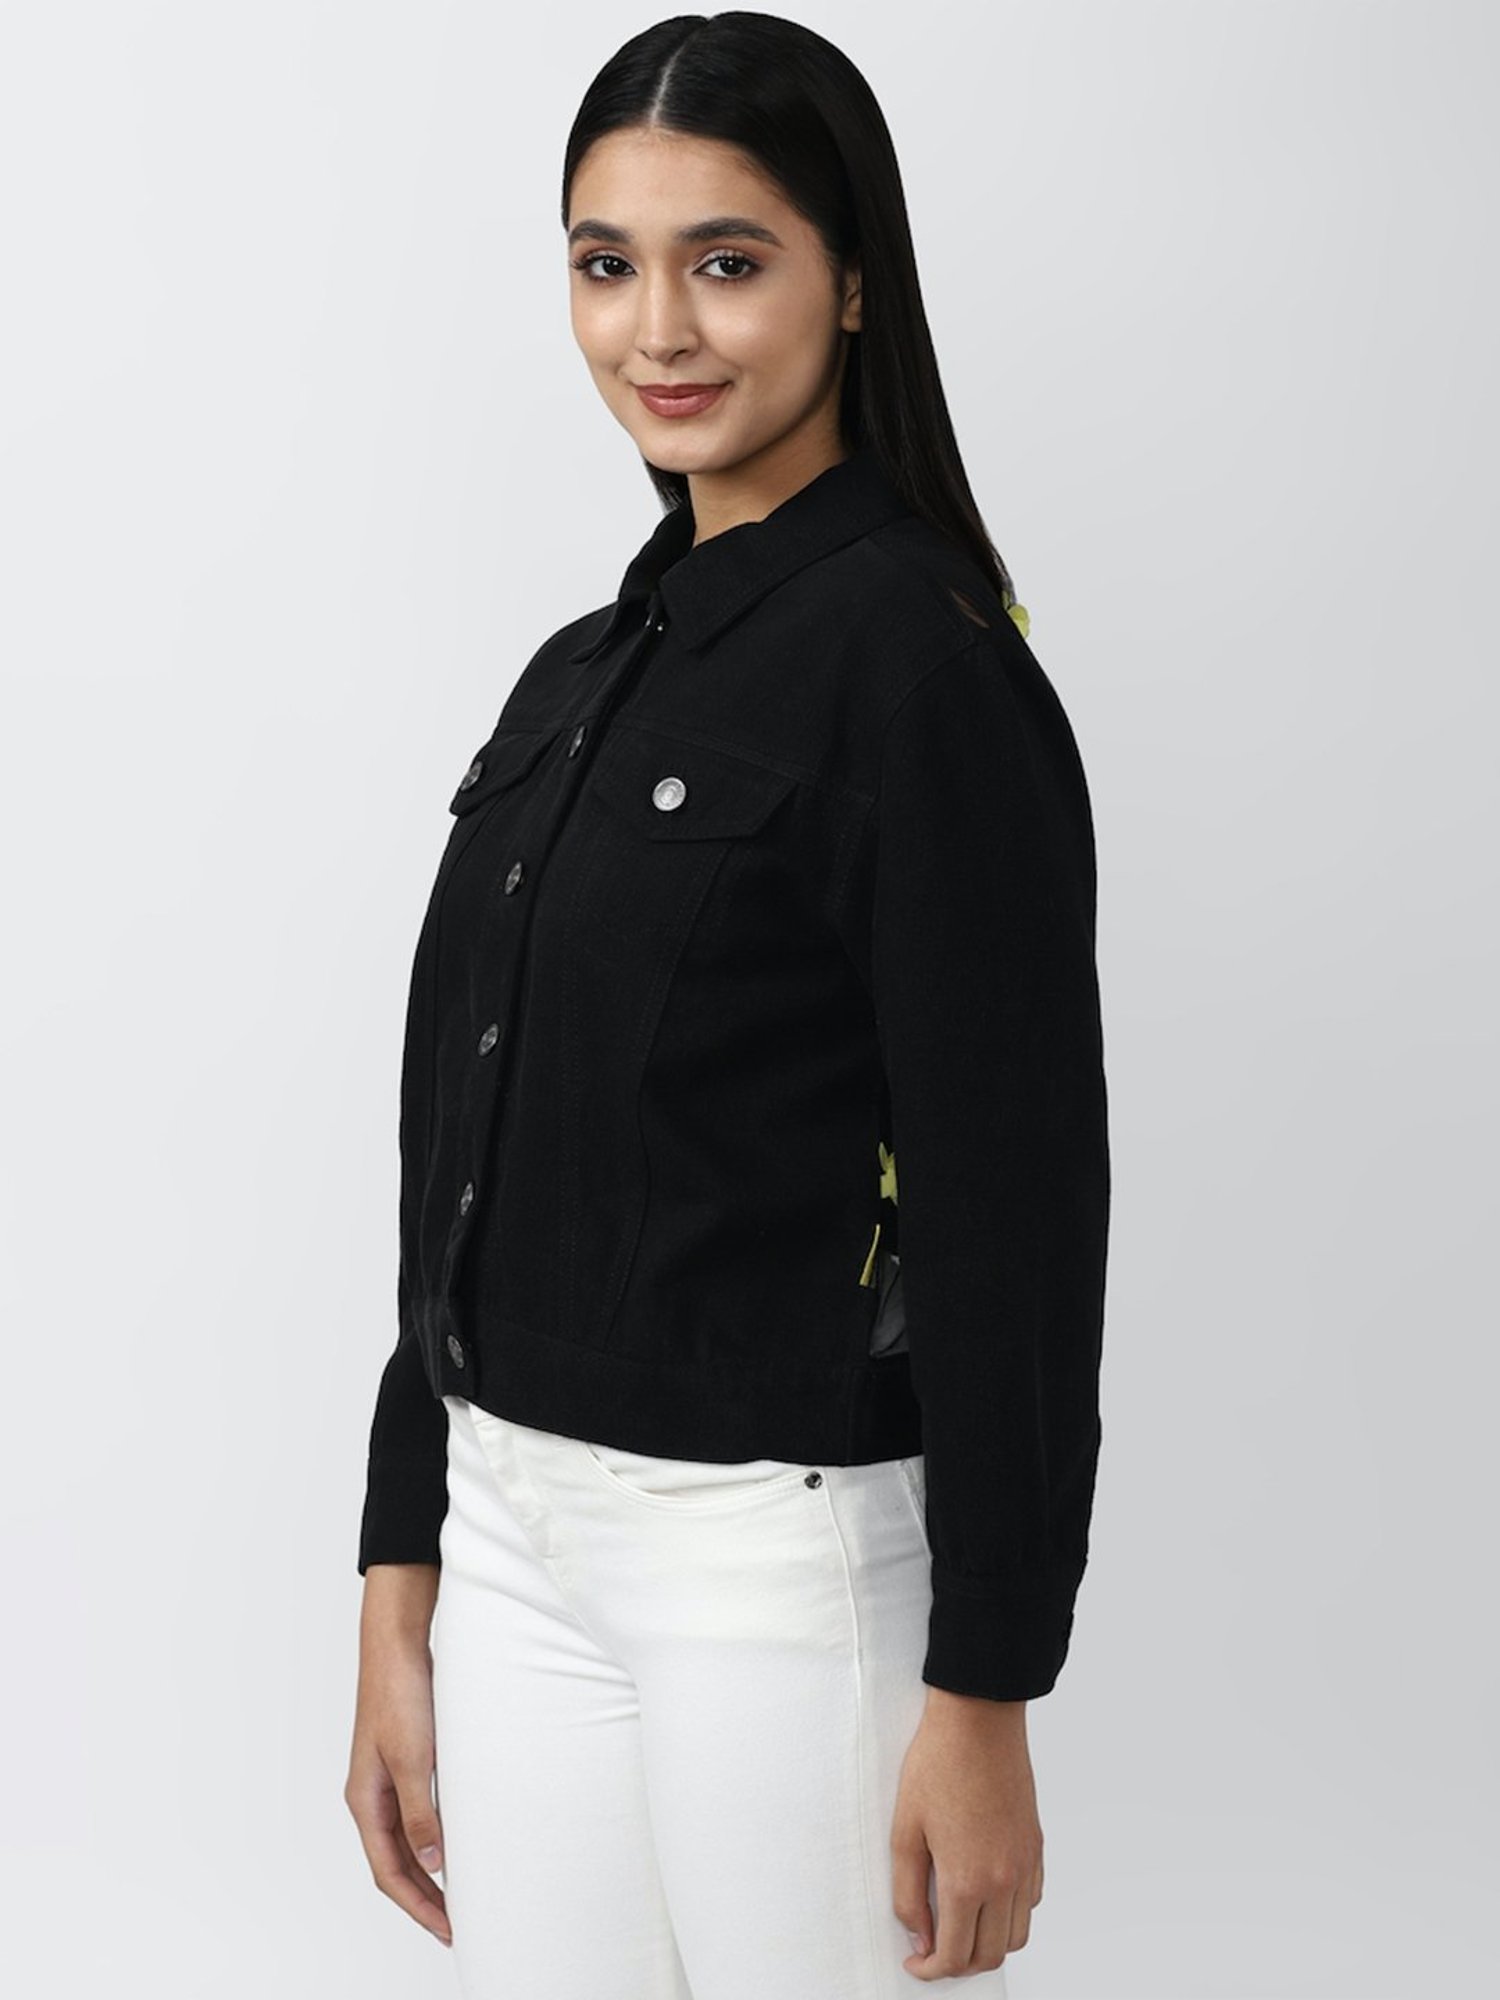 Buy A-IN GIRLS Black Embroidery Denim Jacket Online | ZALORA Malaysia